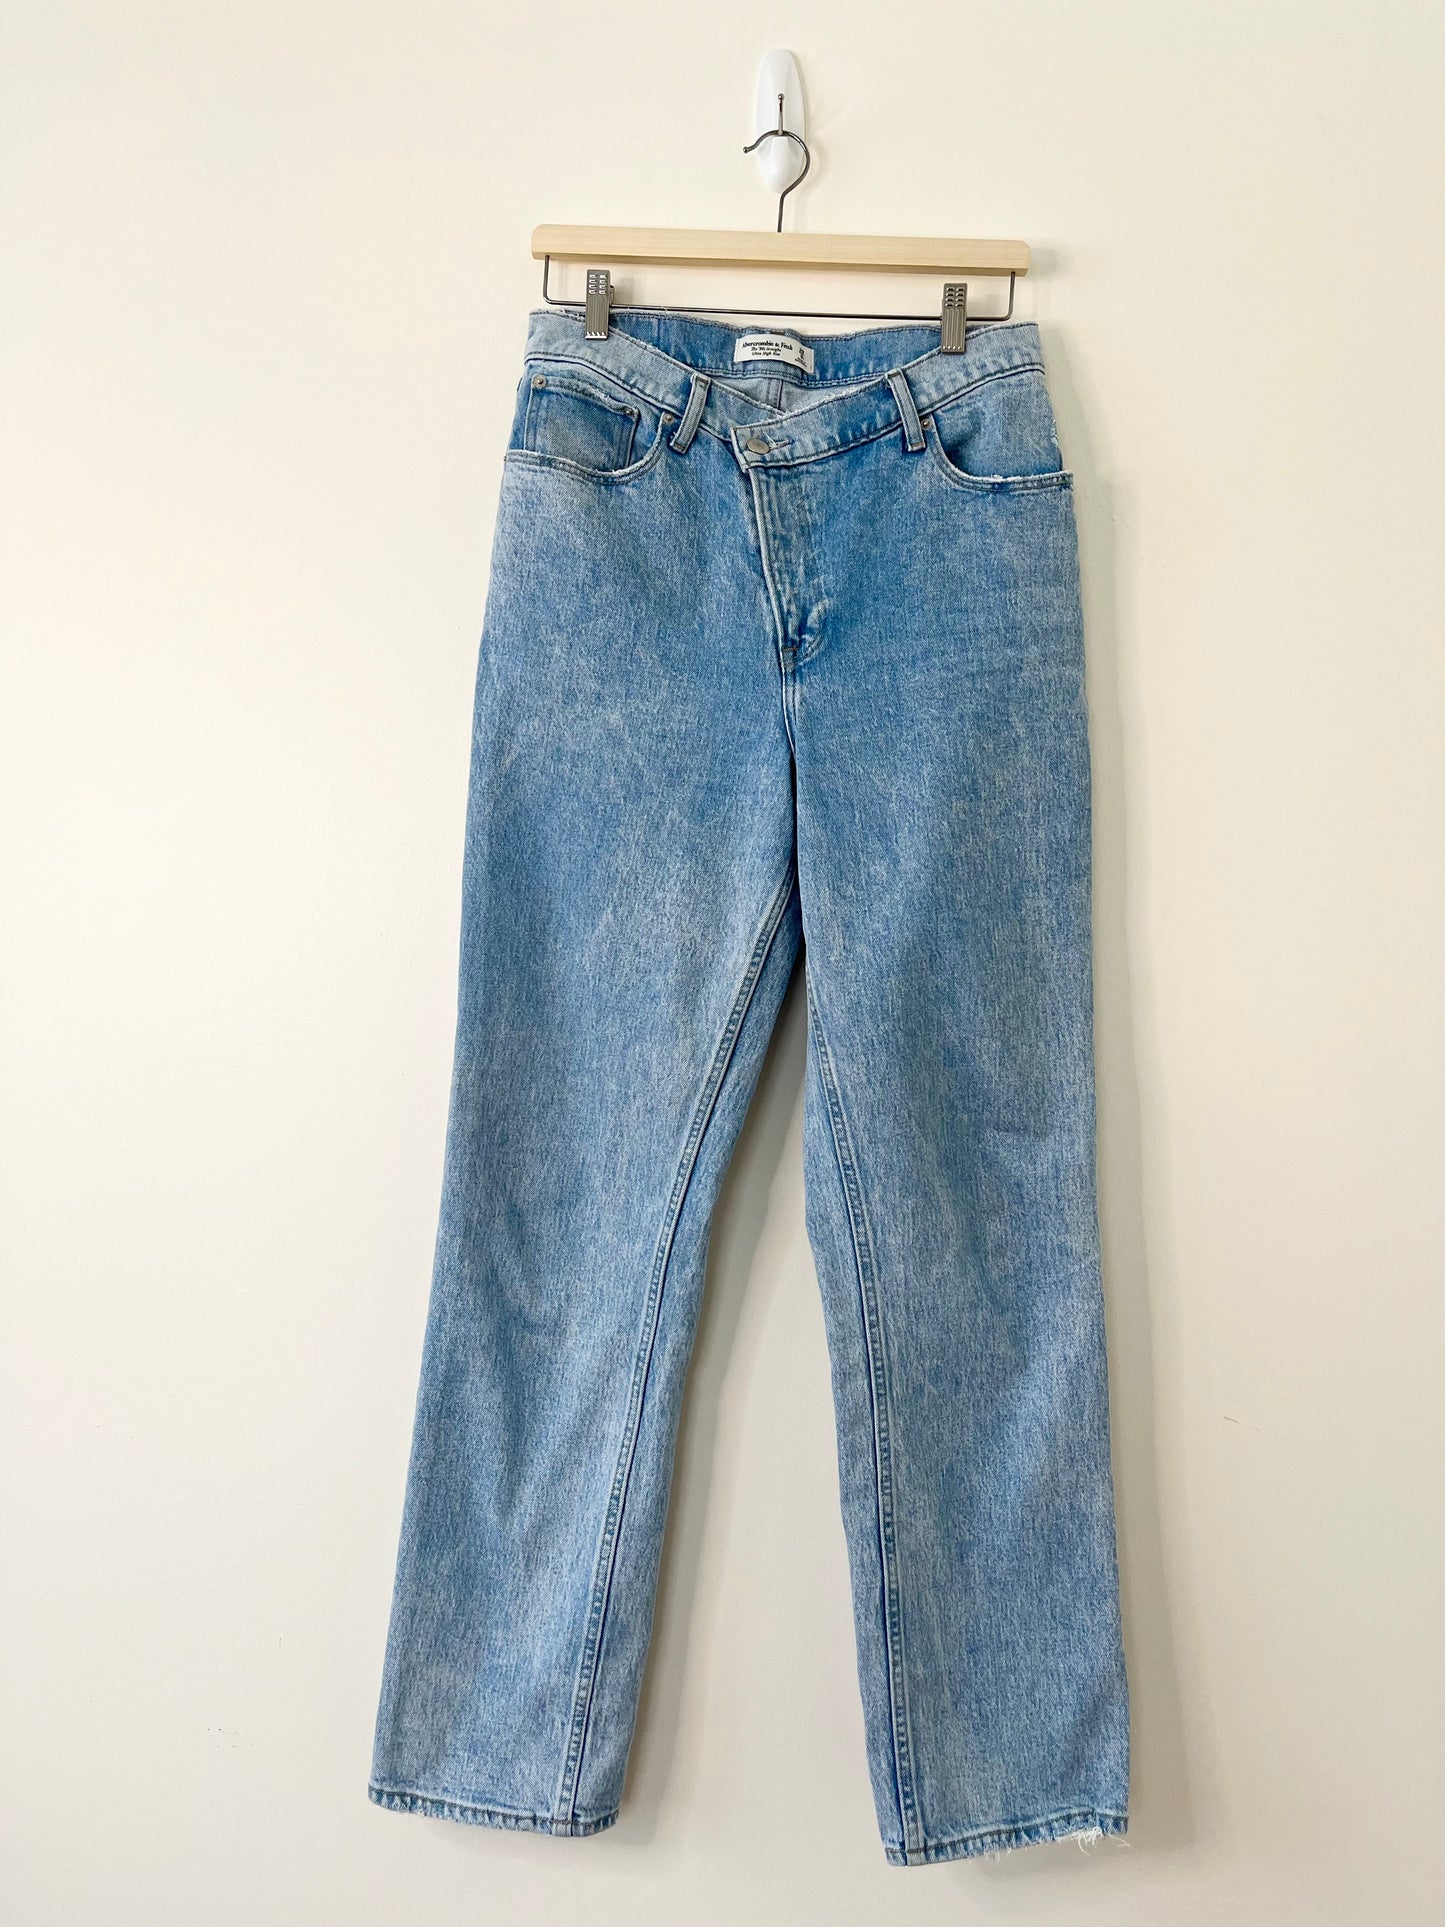 Abercrombie Crossover Jeans (16" across waist)